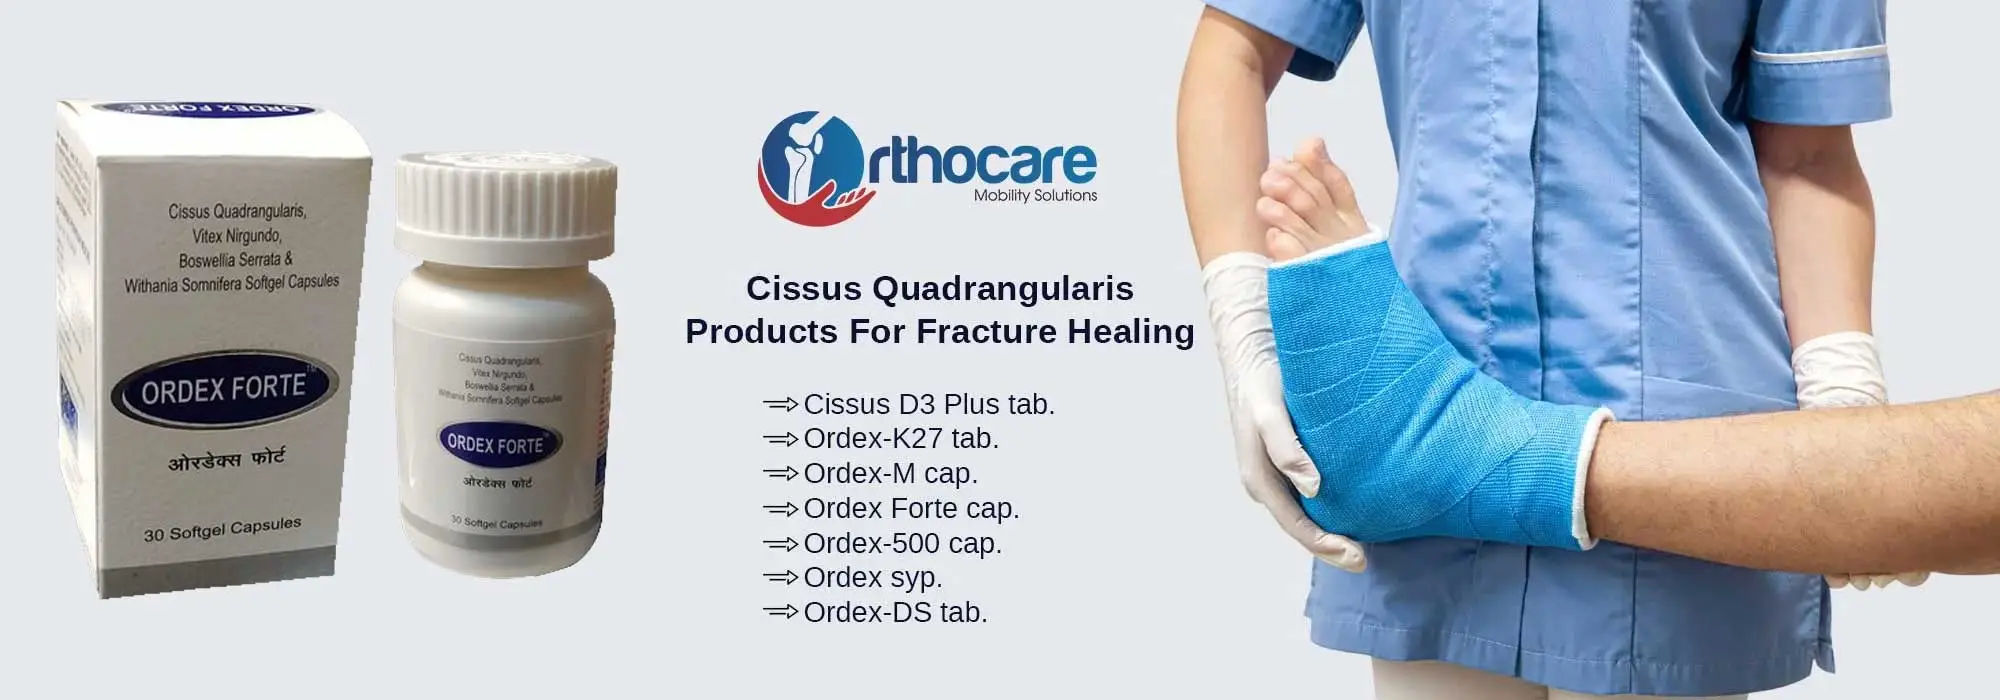 Cissus Quadrangularis Products For Fracture Healing Suppliers in Guna